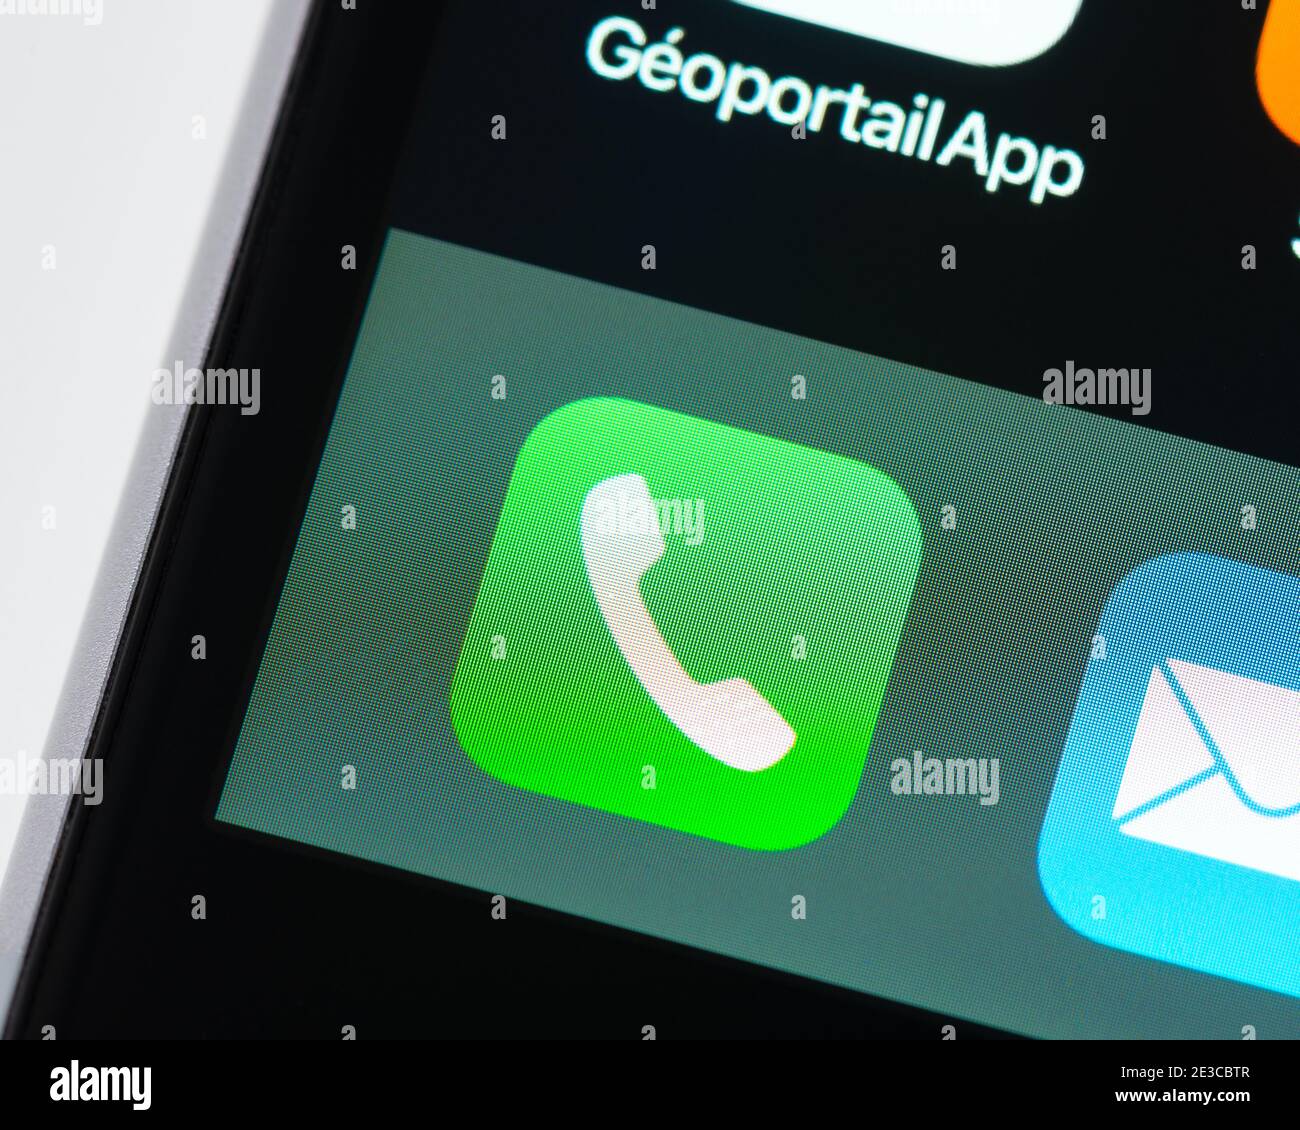 Phone app icon on Apple iPhone screen Stock Photo